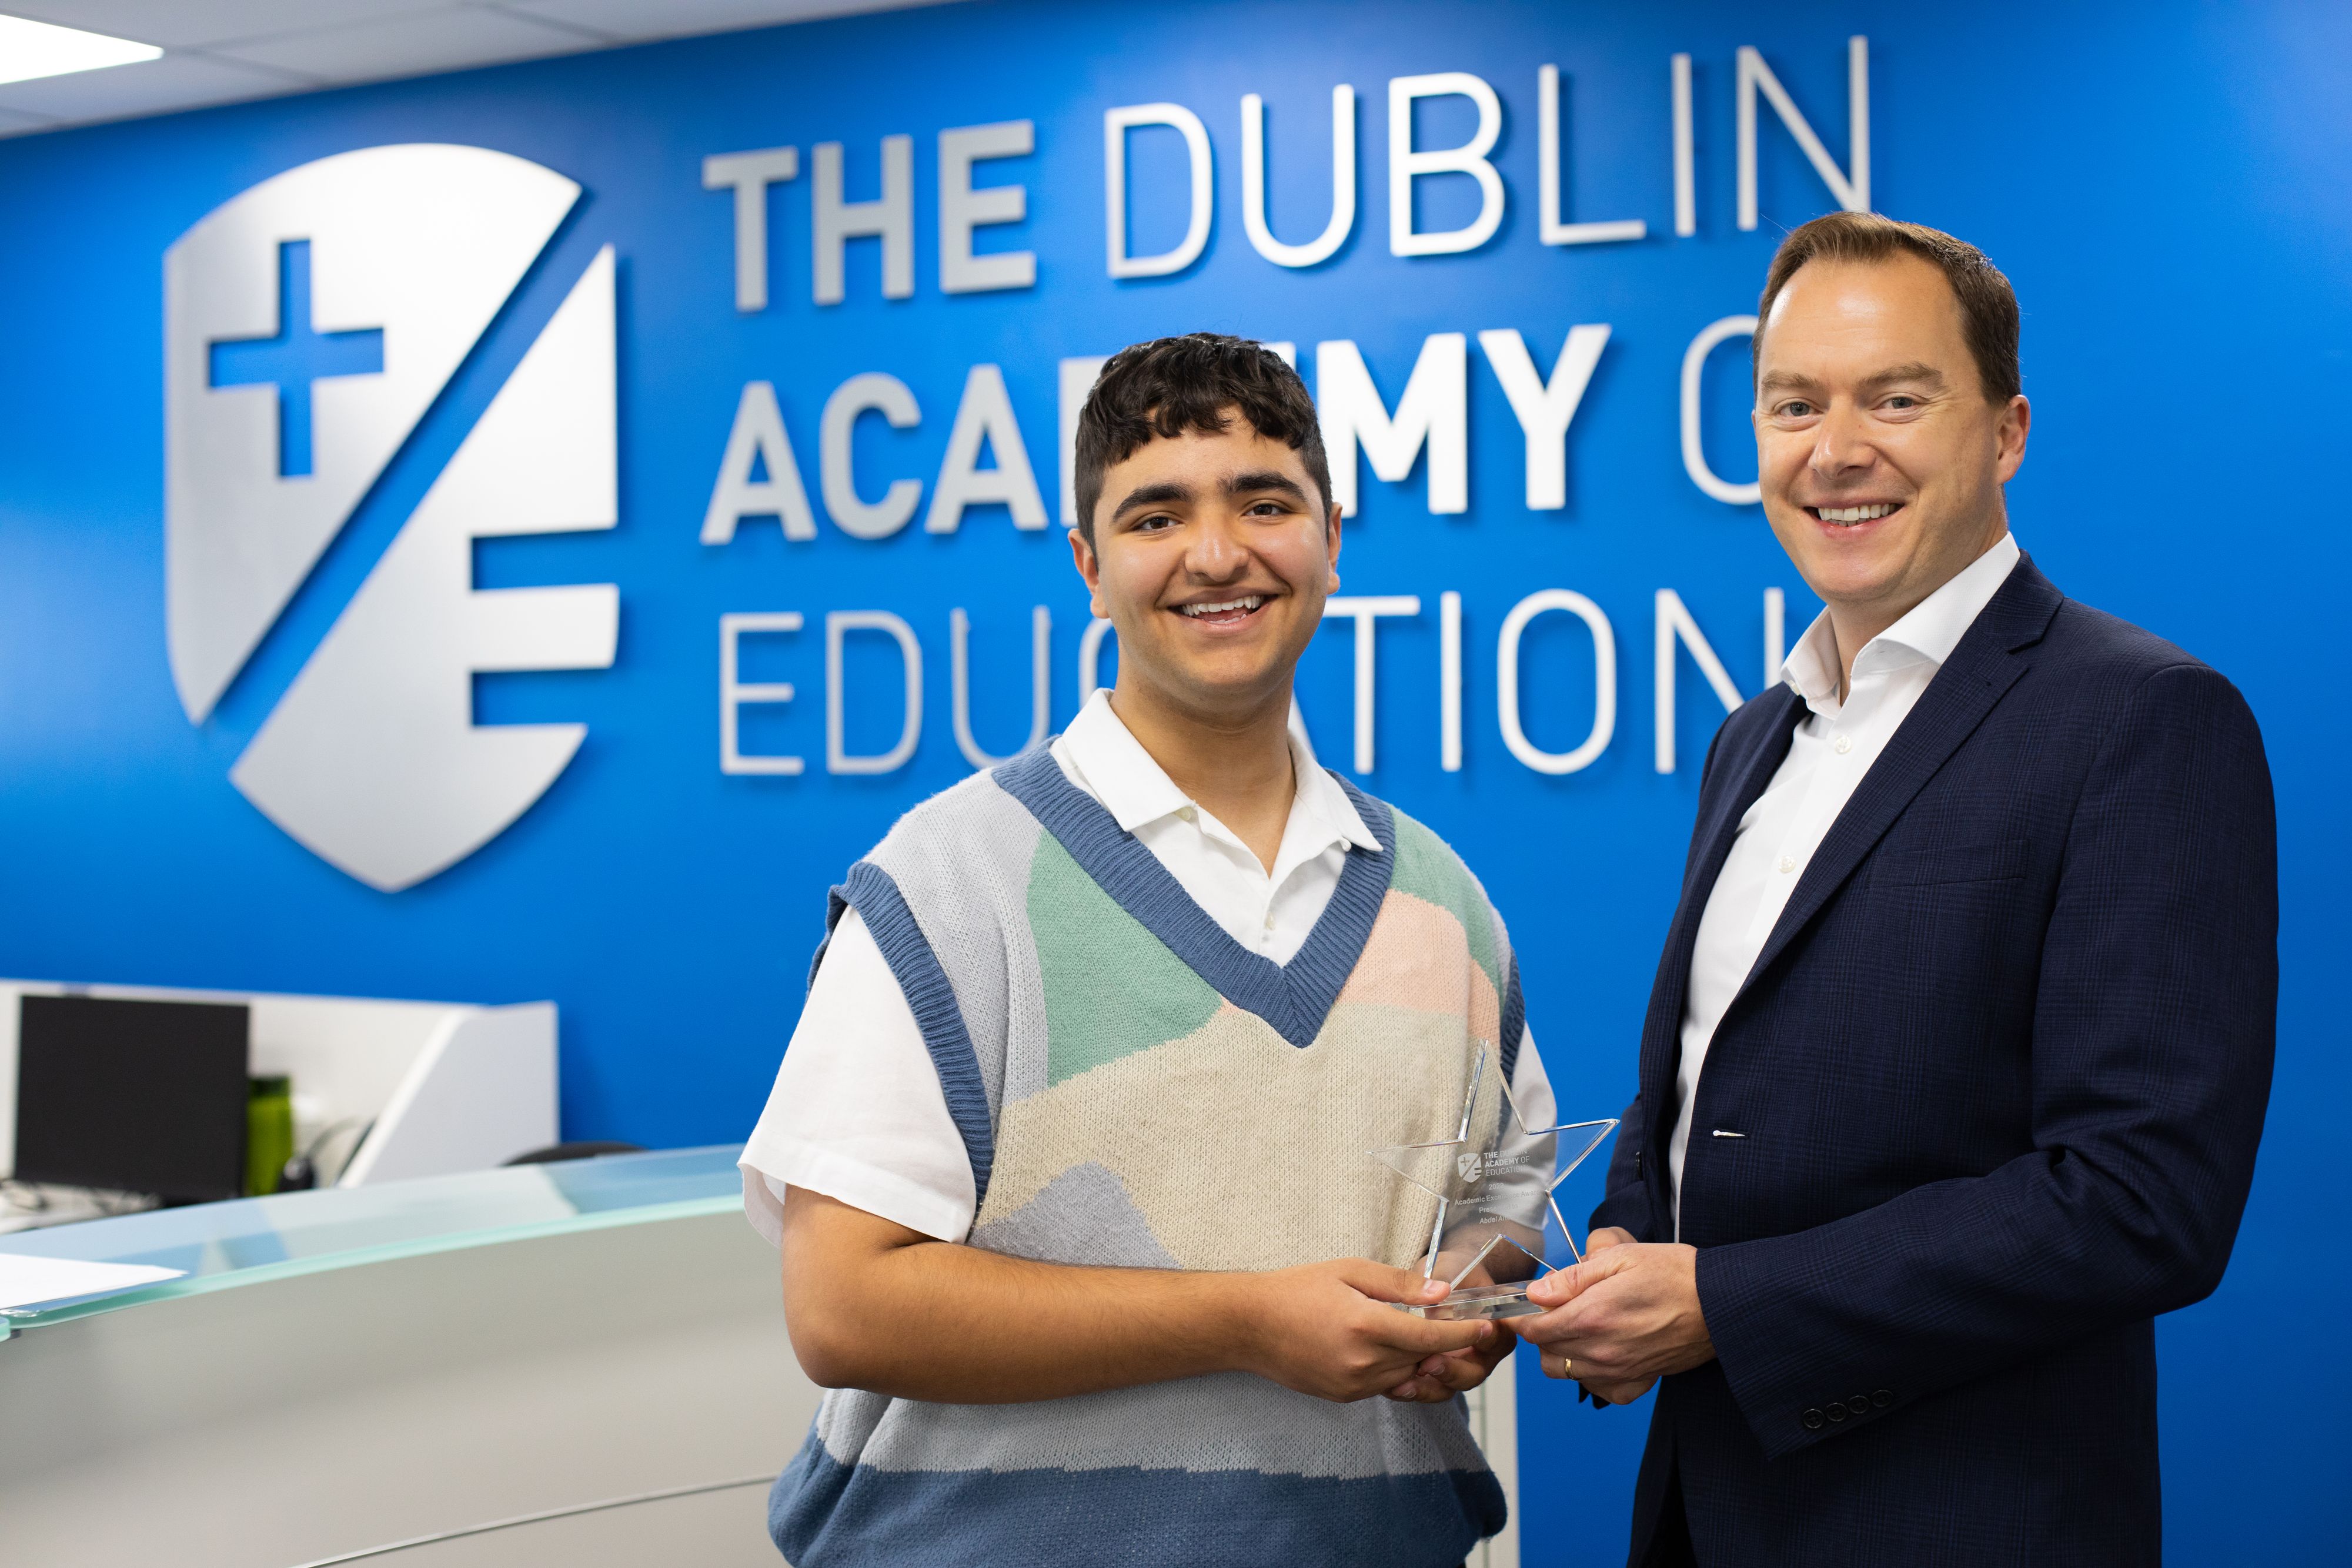 Ciaran Hartigan presents 625 points award on behalf of the Dublin Academy of Education